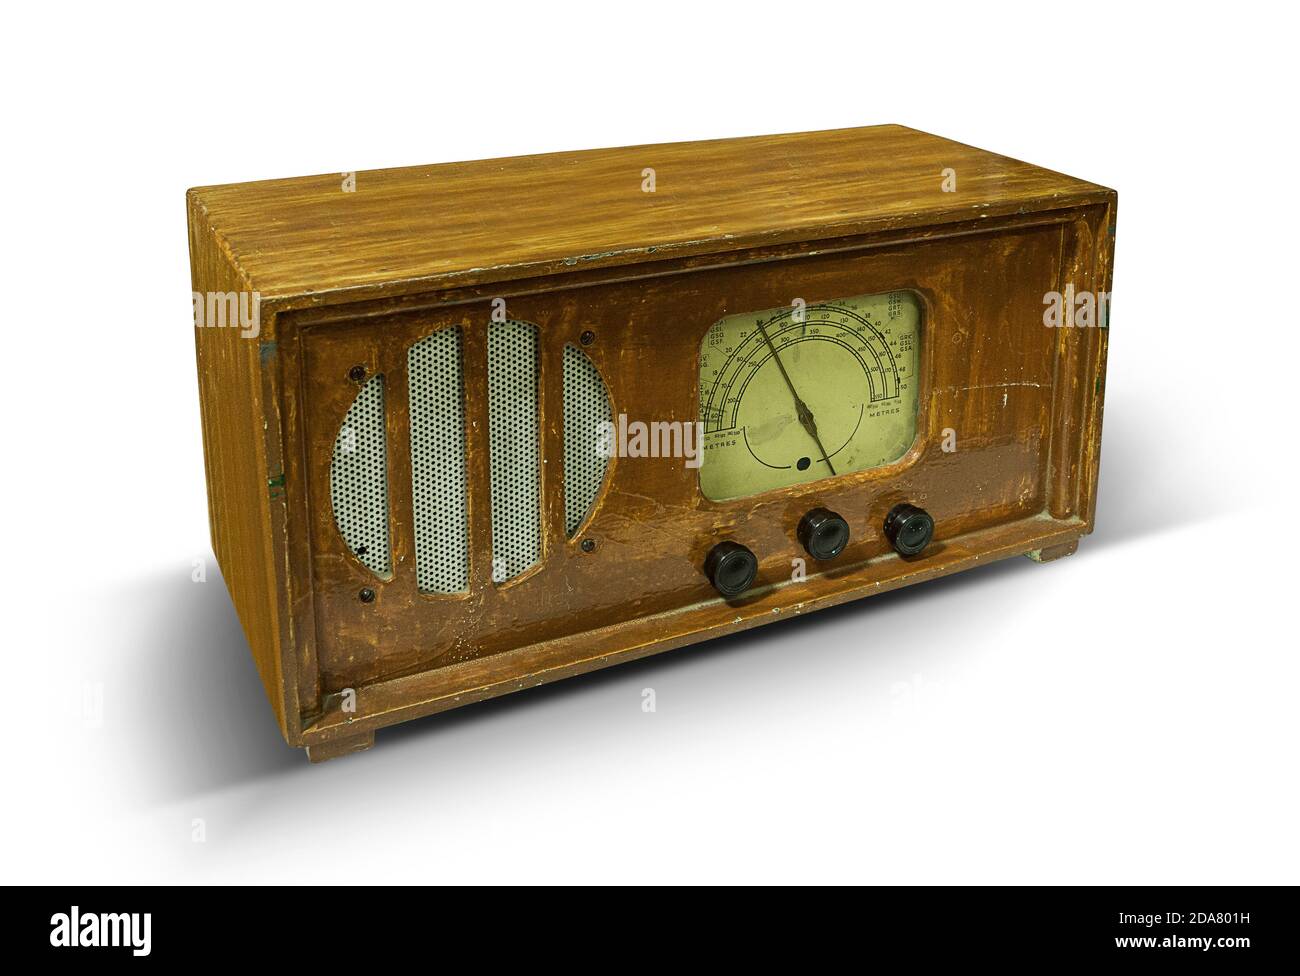 Vintage wooden radio isolated on white background Stock Photo